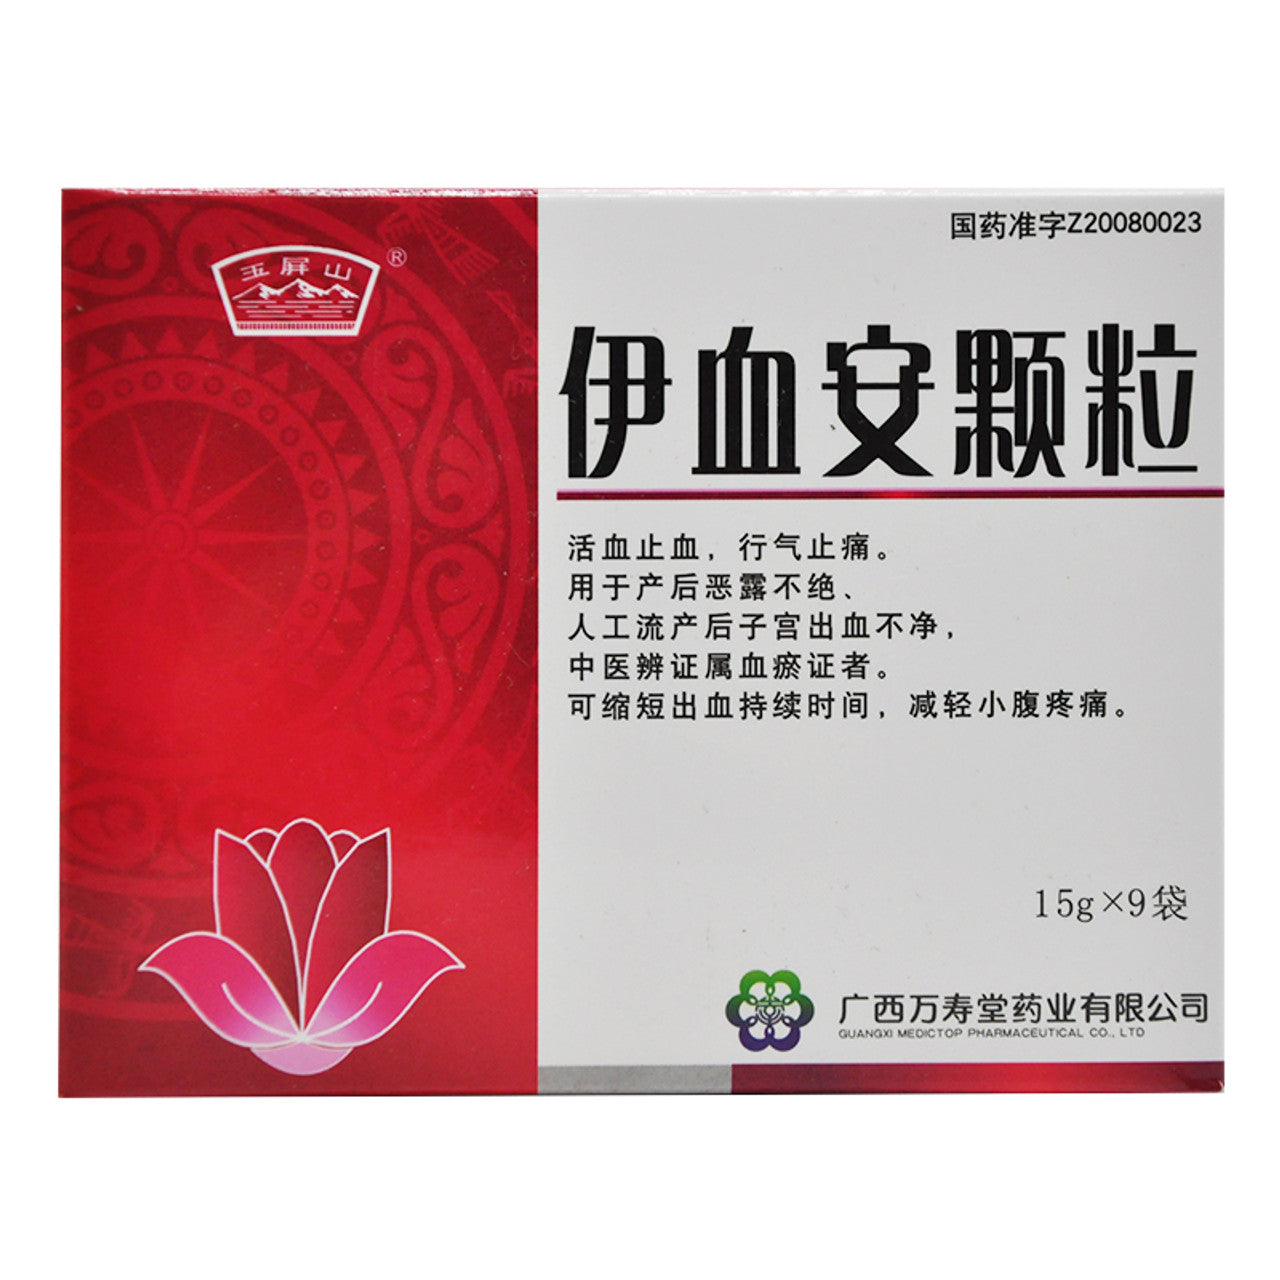 China Herb. Brand Yupingshan. Yixue'an Keli or Yi Xue An Ke Li or YiXueAnKeLi or Yixue'an Granules or Yi Xue An Granules for Postpartum Hemorrhage.